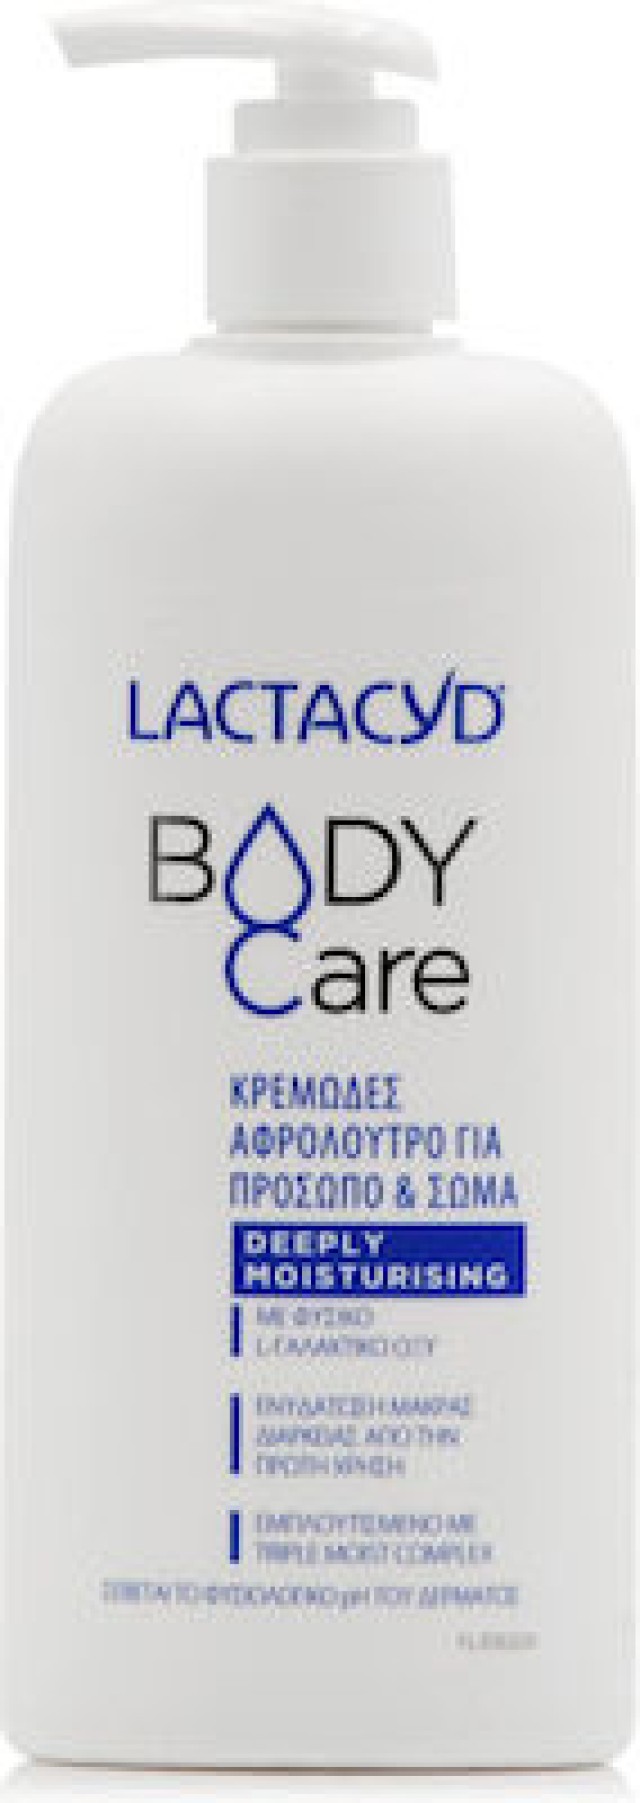 LACTACYD Body Care Deeply Moisturising Ενυδατικό Αφρόλουτρο Για Πρόσωπο & Σώμα, 300ml